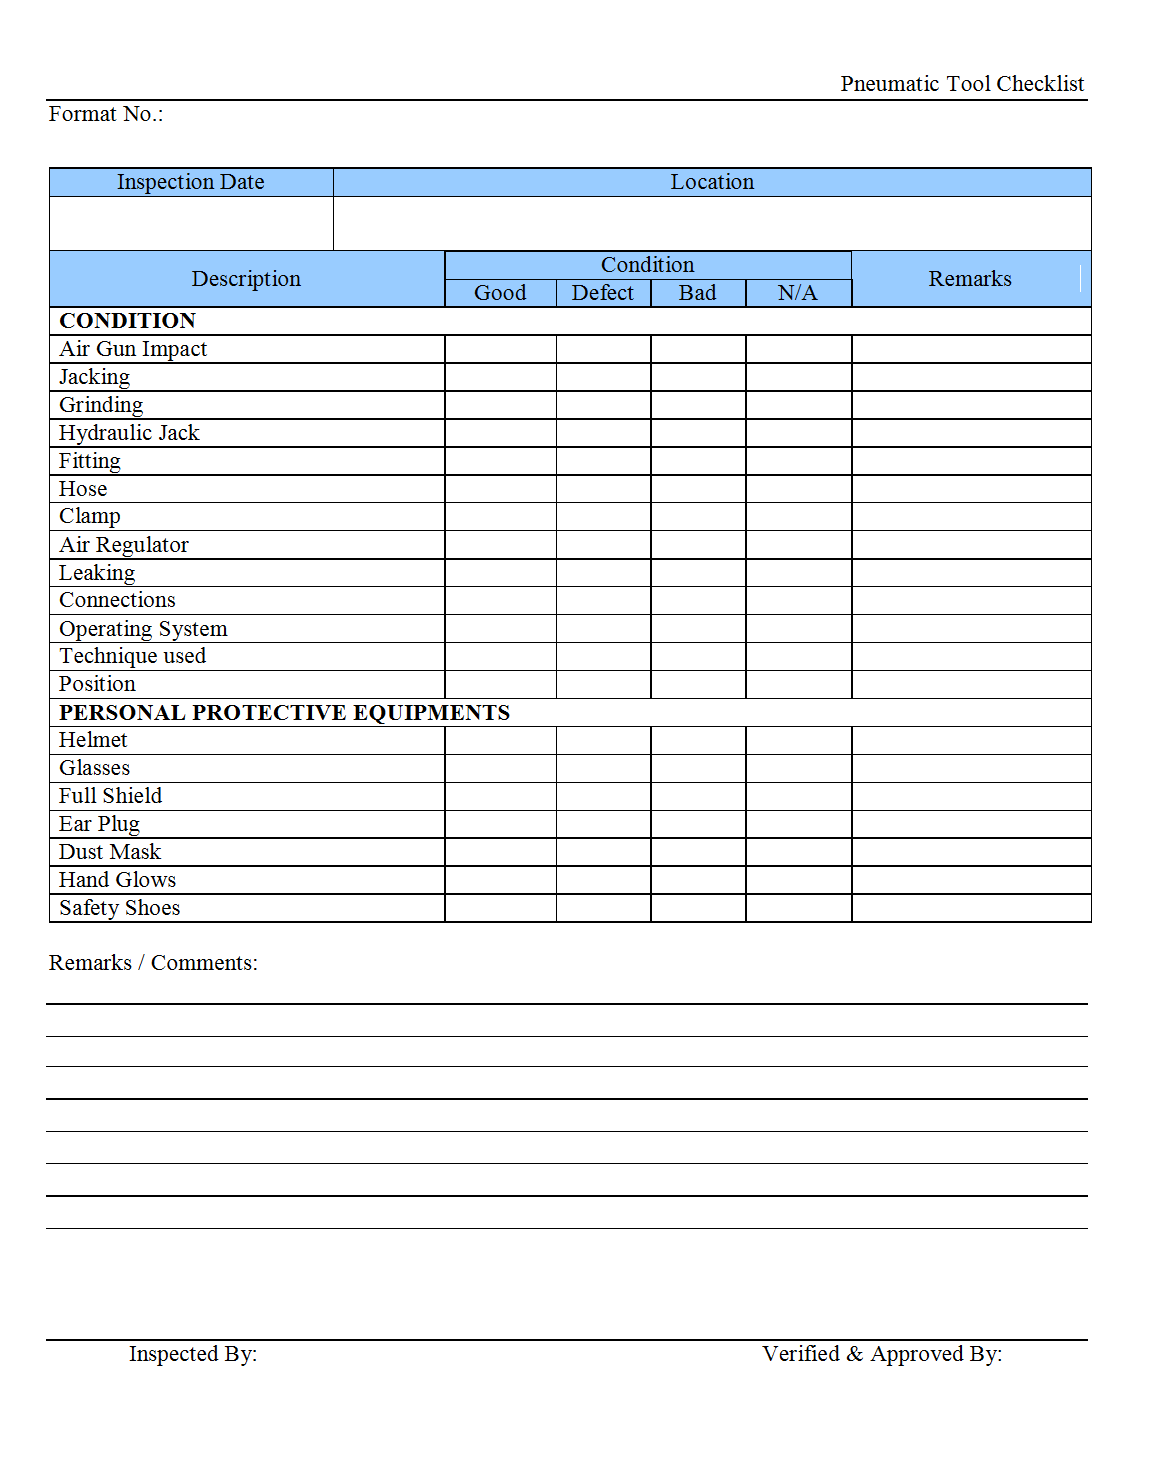 Pneumatic tool checklist